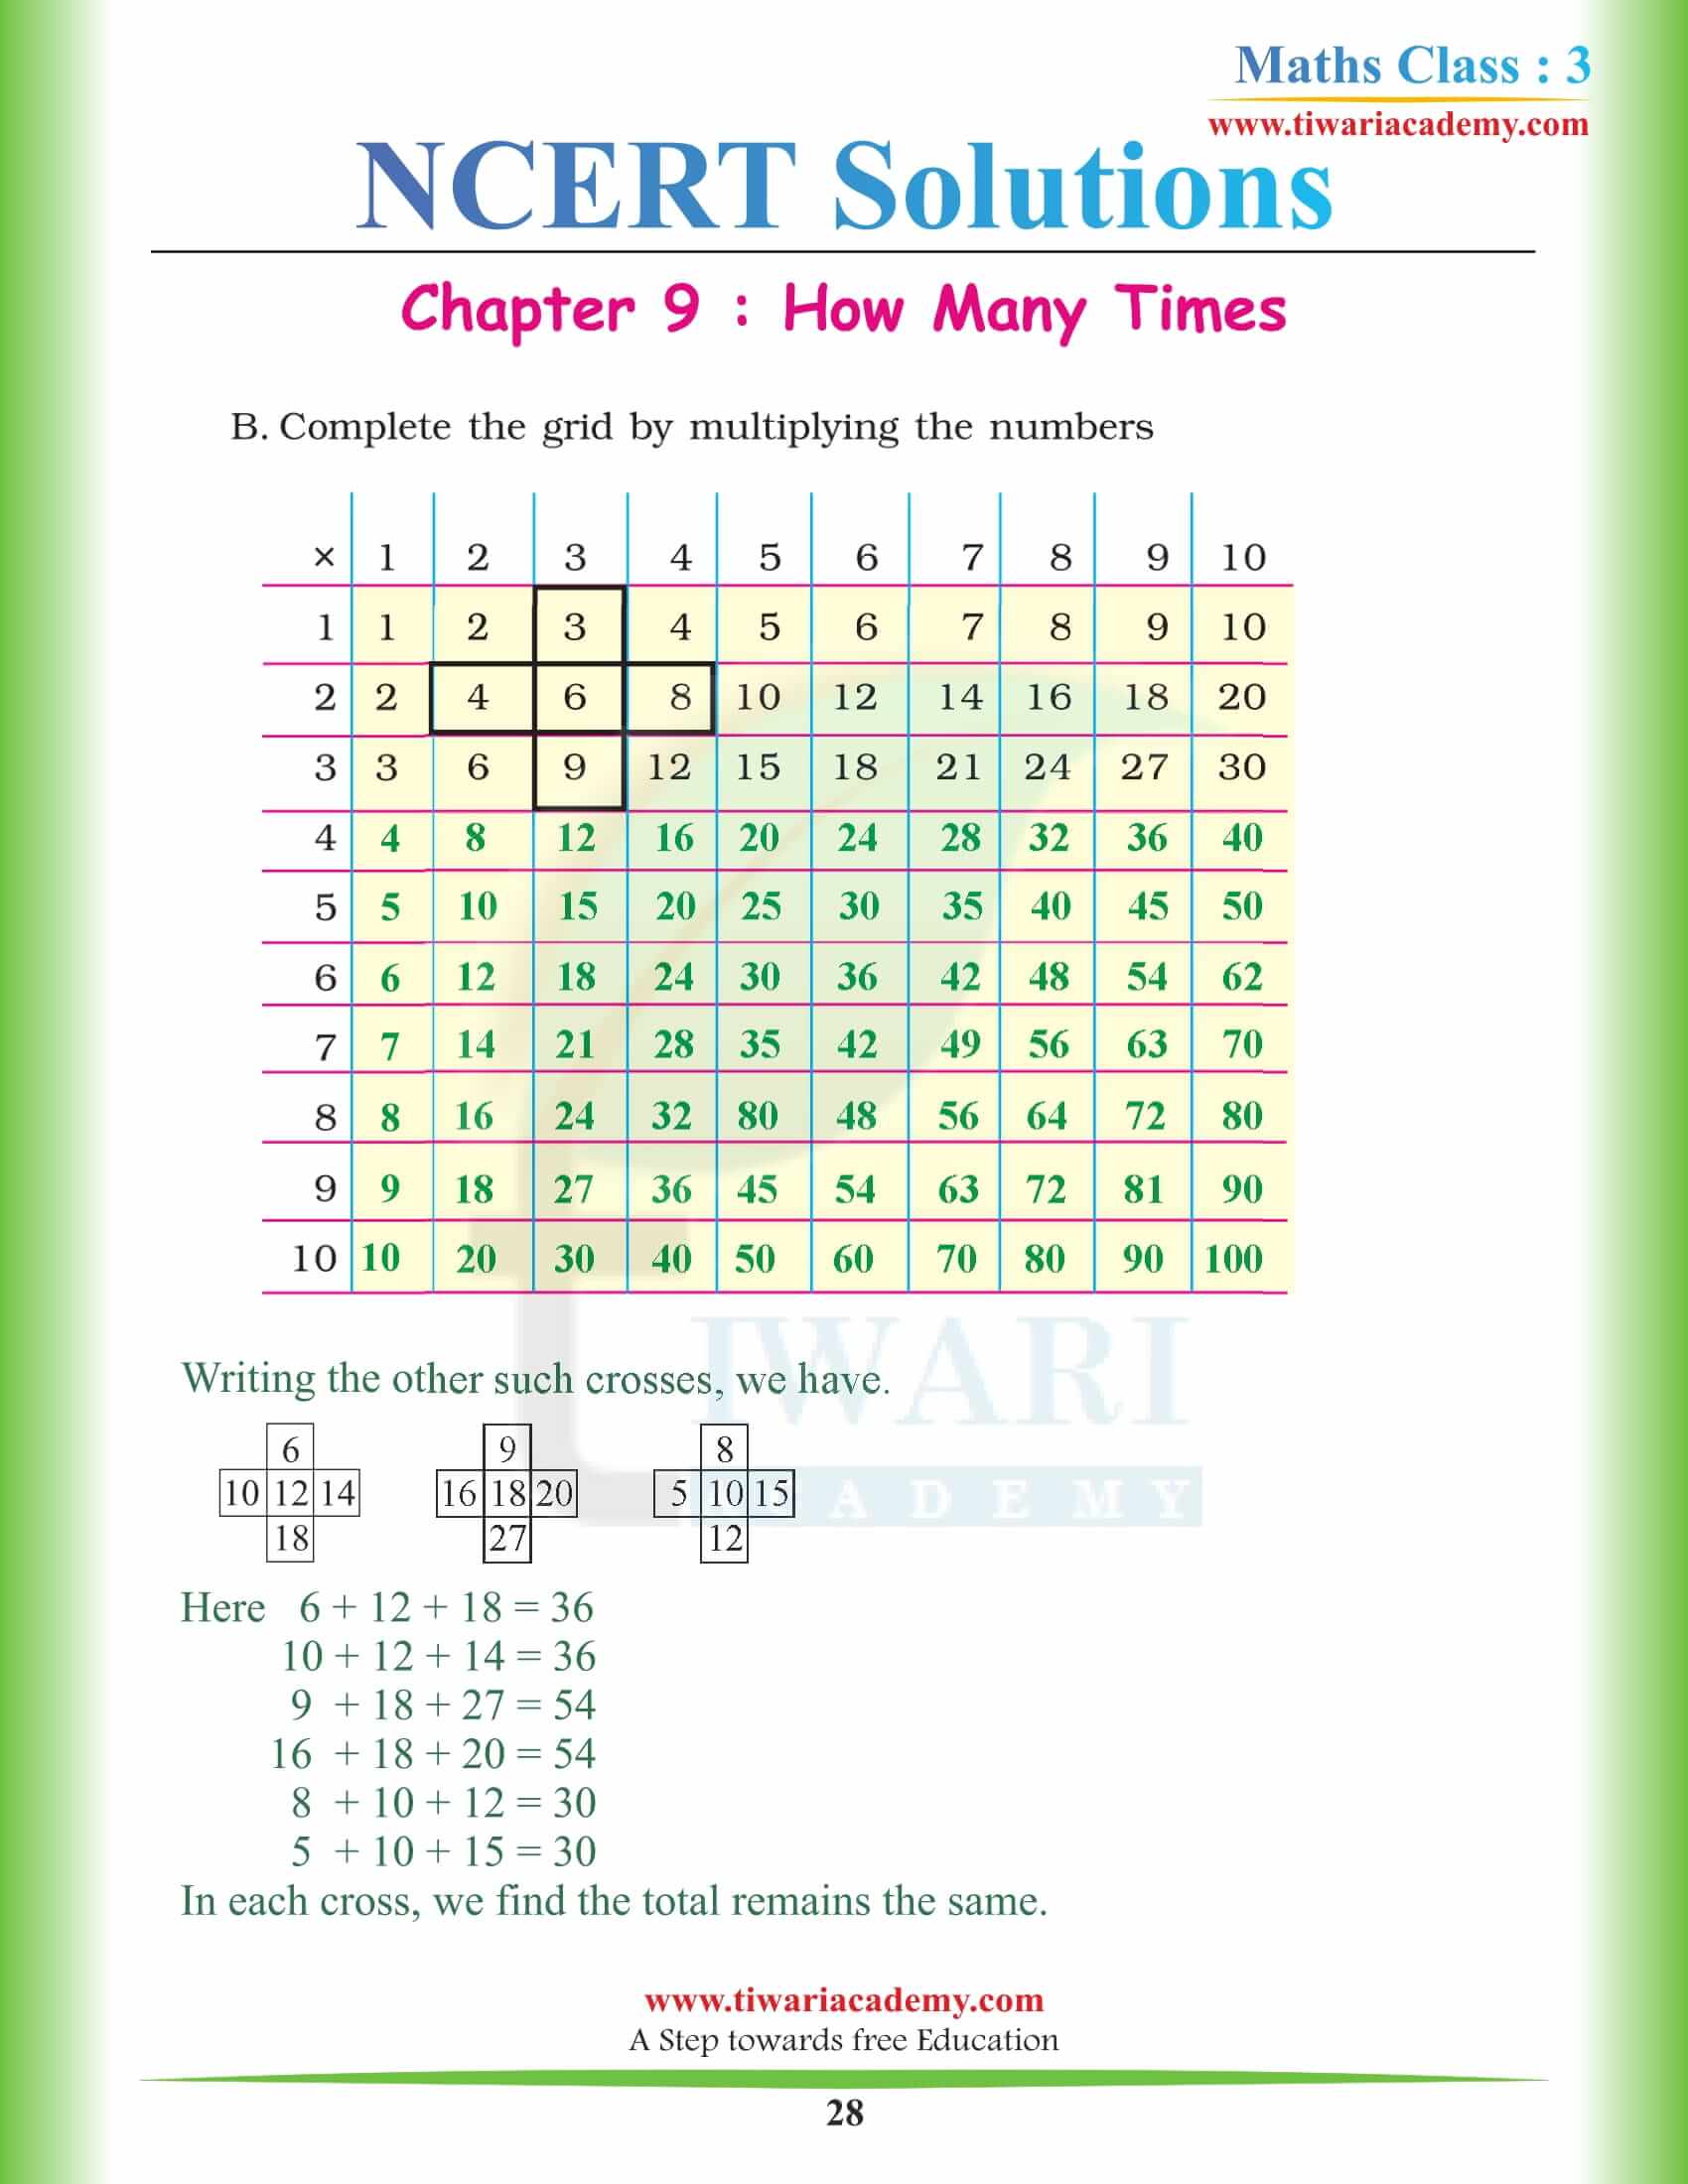 3rd Maths NCERT Chapter 9 Solutions pdf